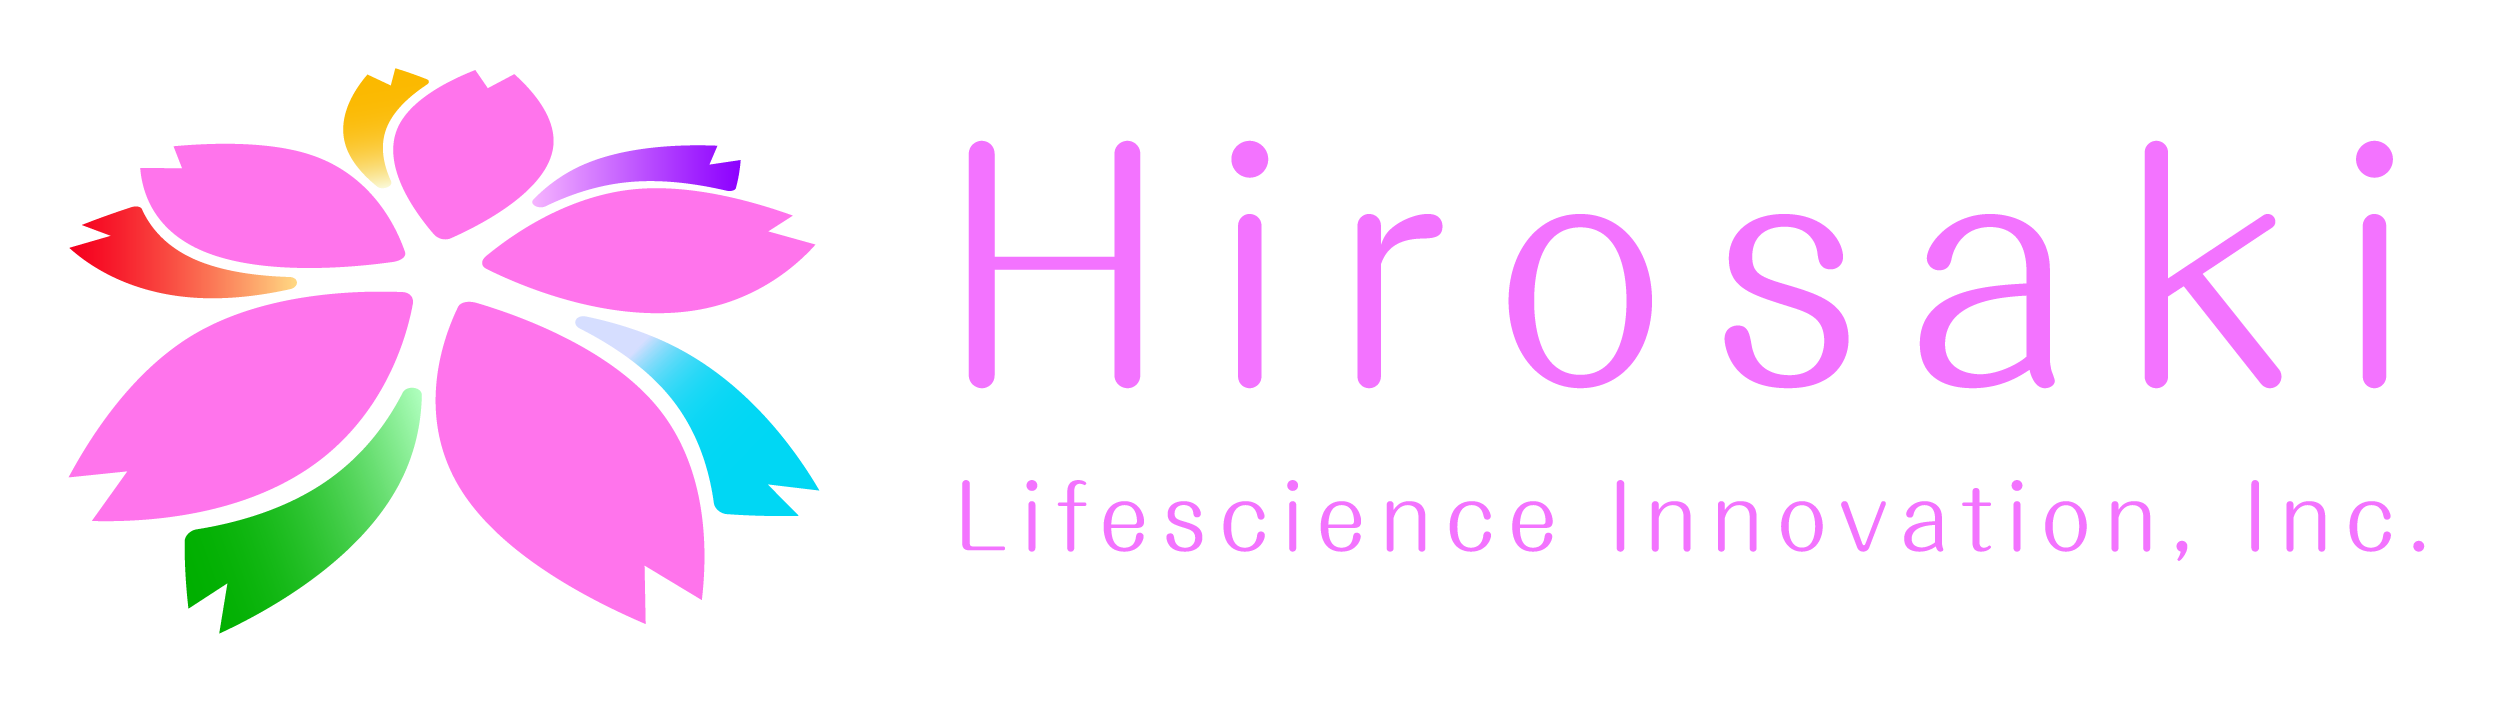 Hirosaki Lifescience Innovation, Inc